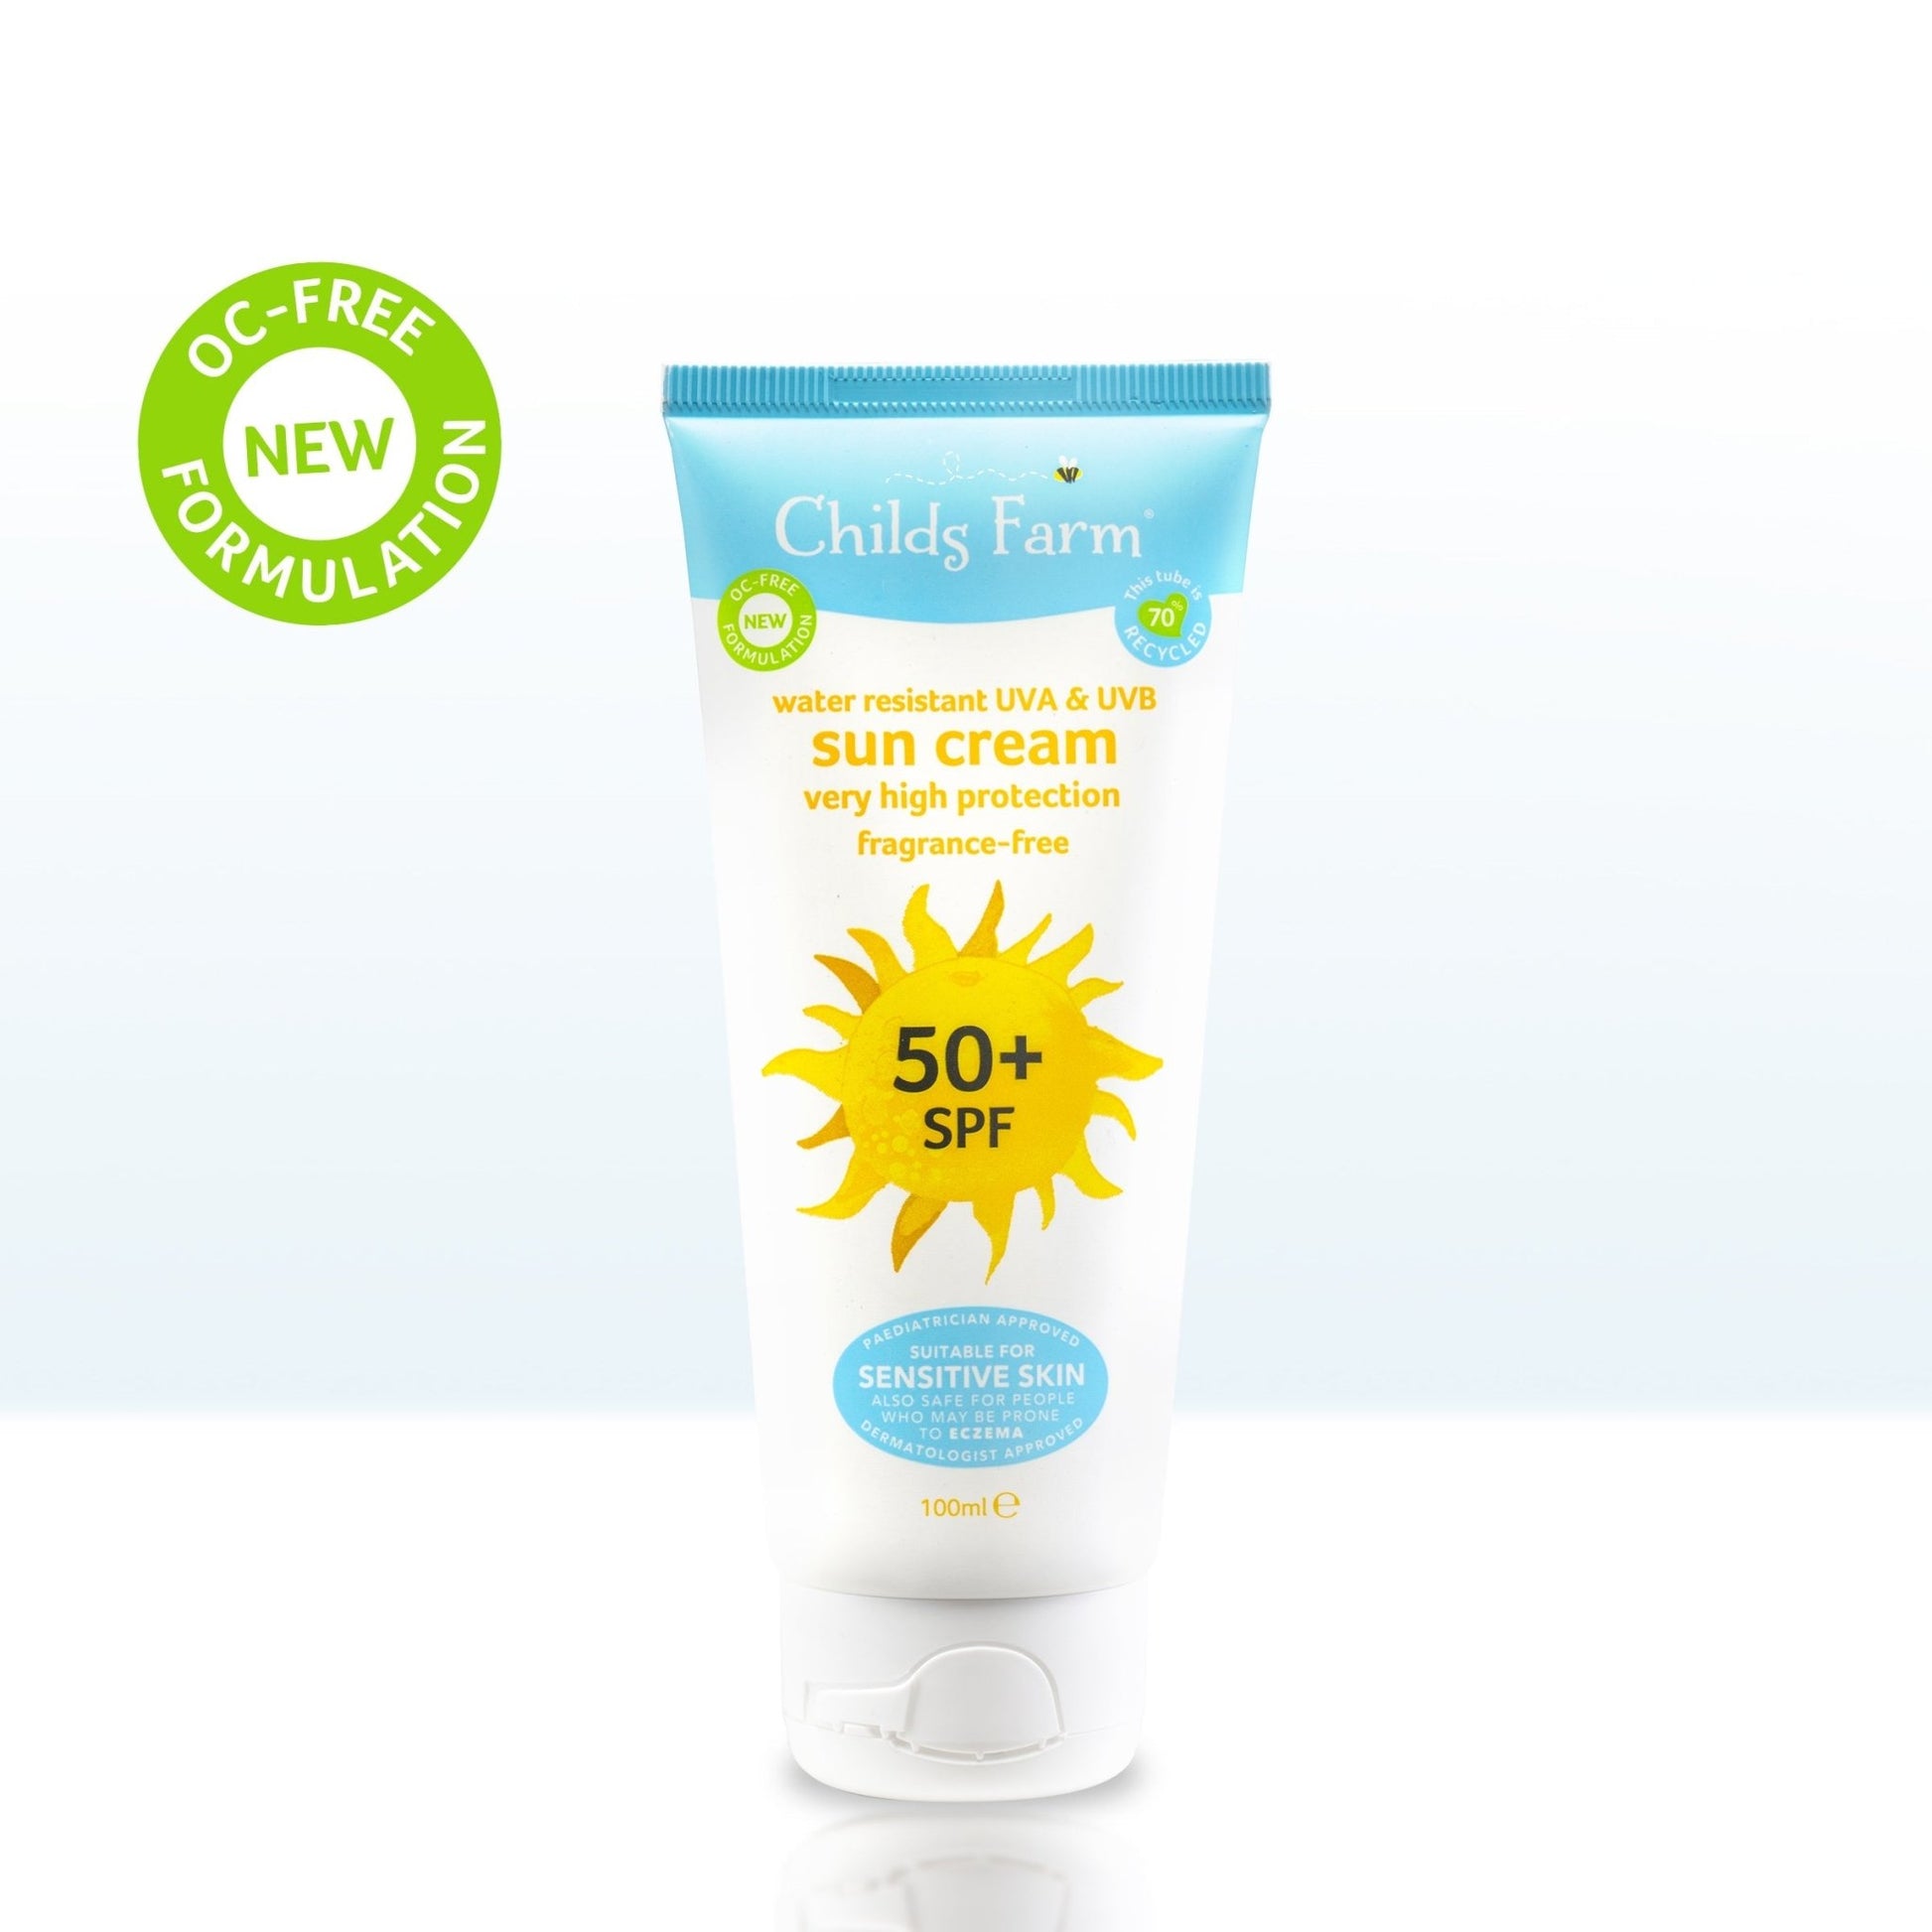 [STAFF] Childs Farm 50+ SPF sun cream fragrance-free